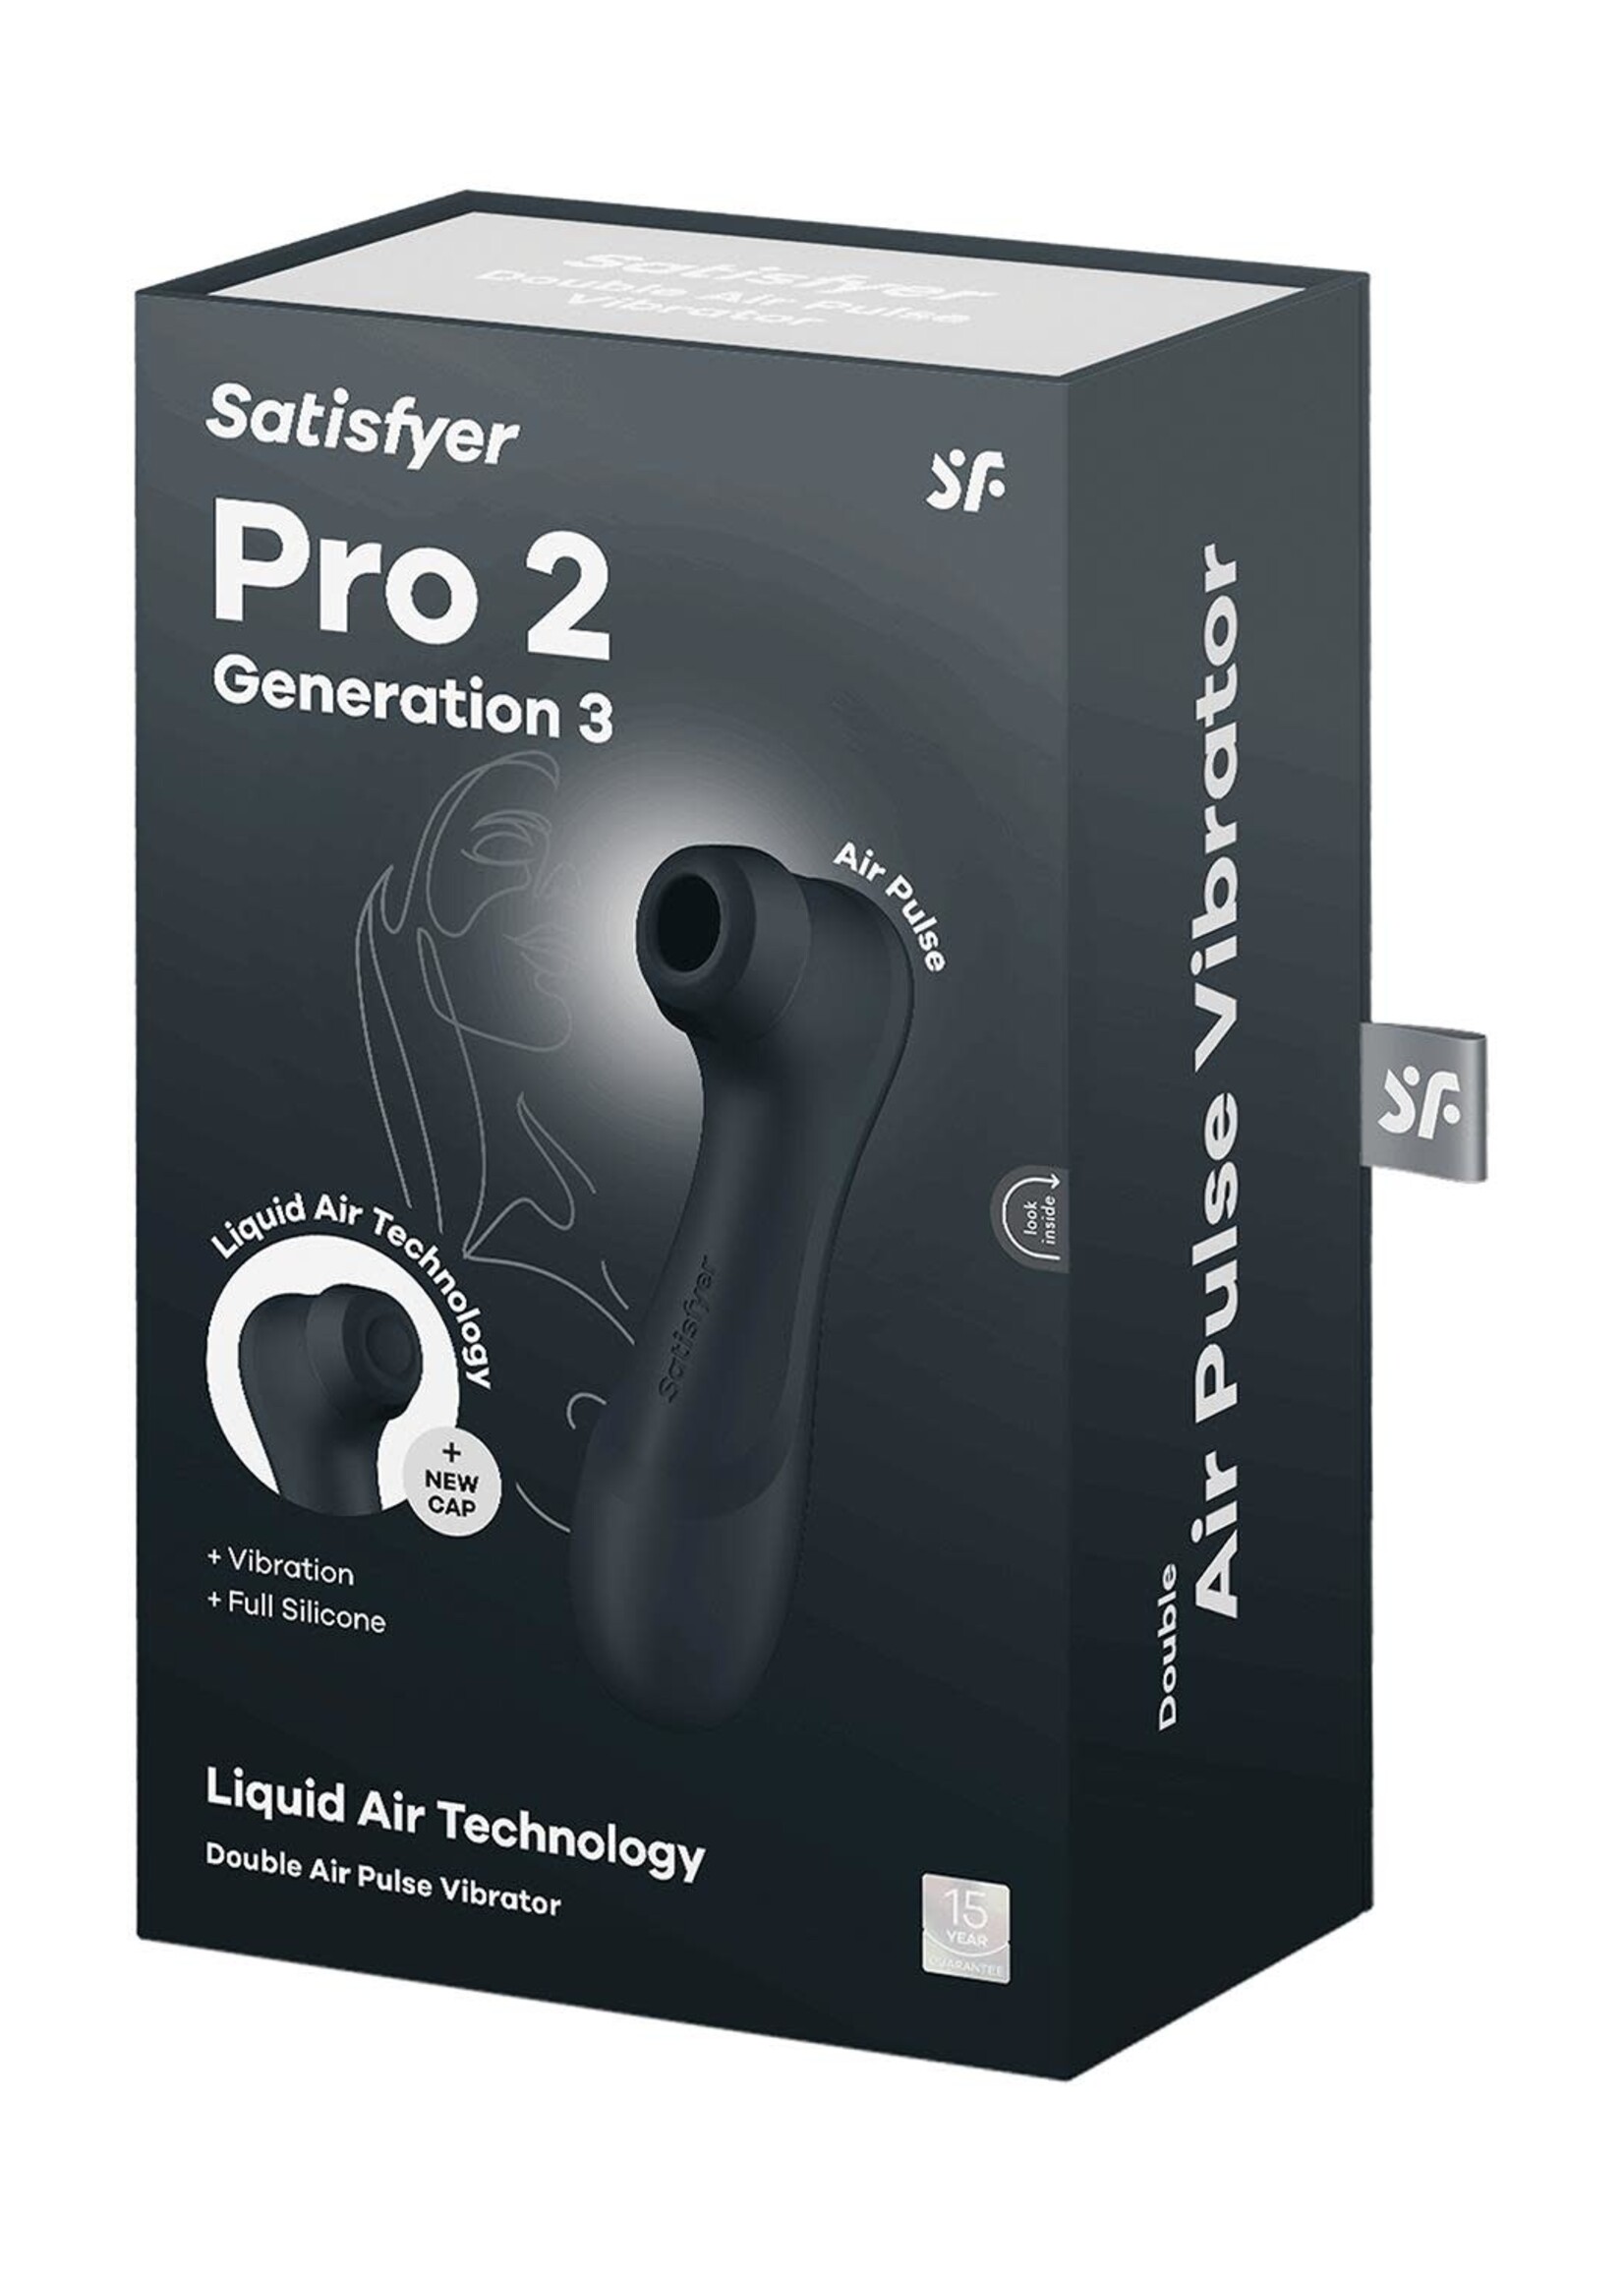 Satisfyer Pro 2 generation 3 with liquid air - dark grey